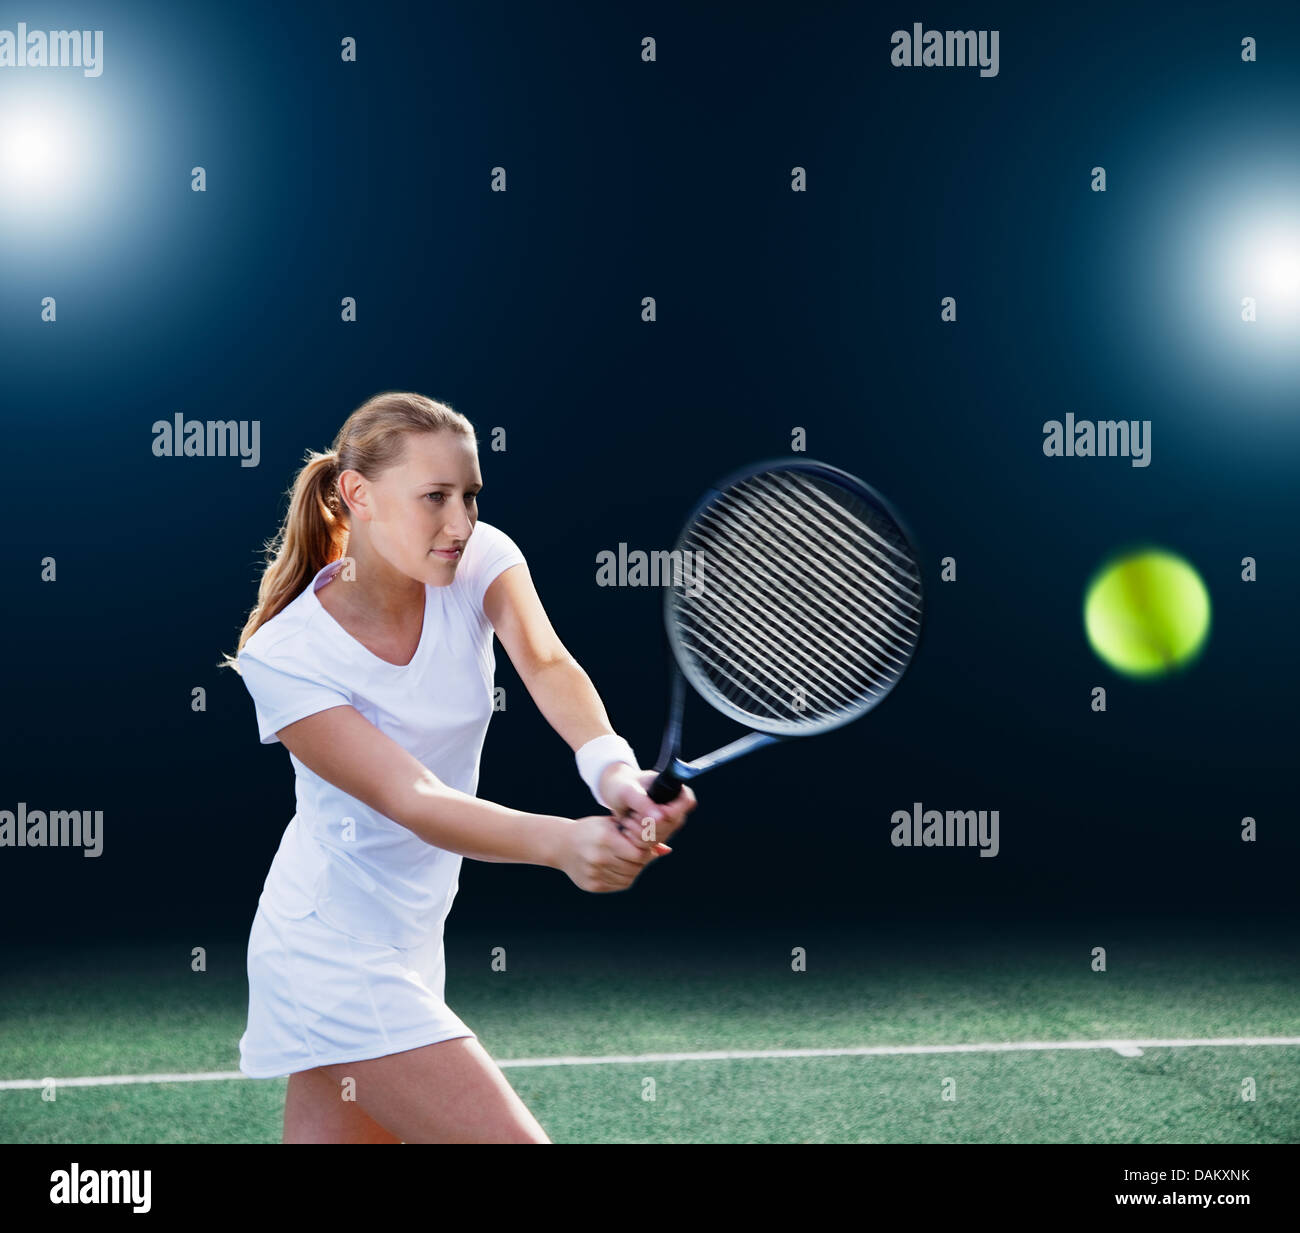 Tennis player hitting ball on court Stock Photo